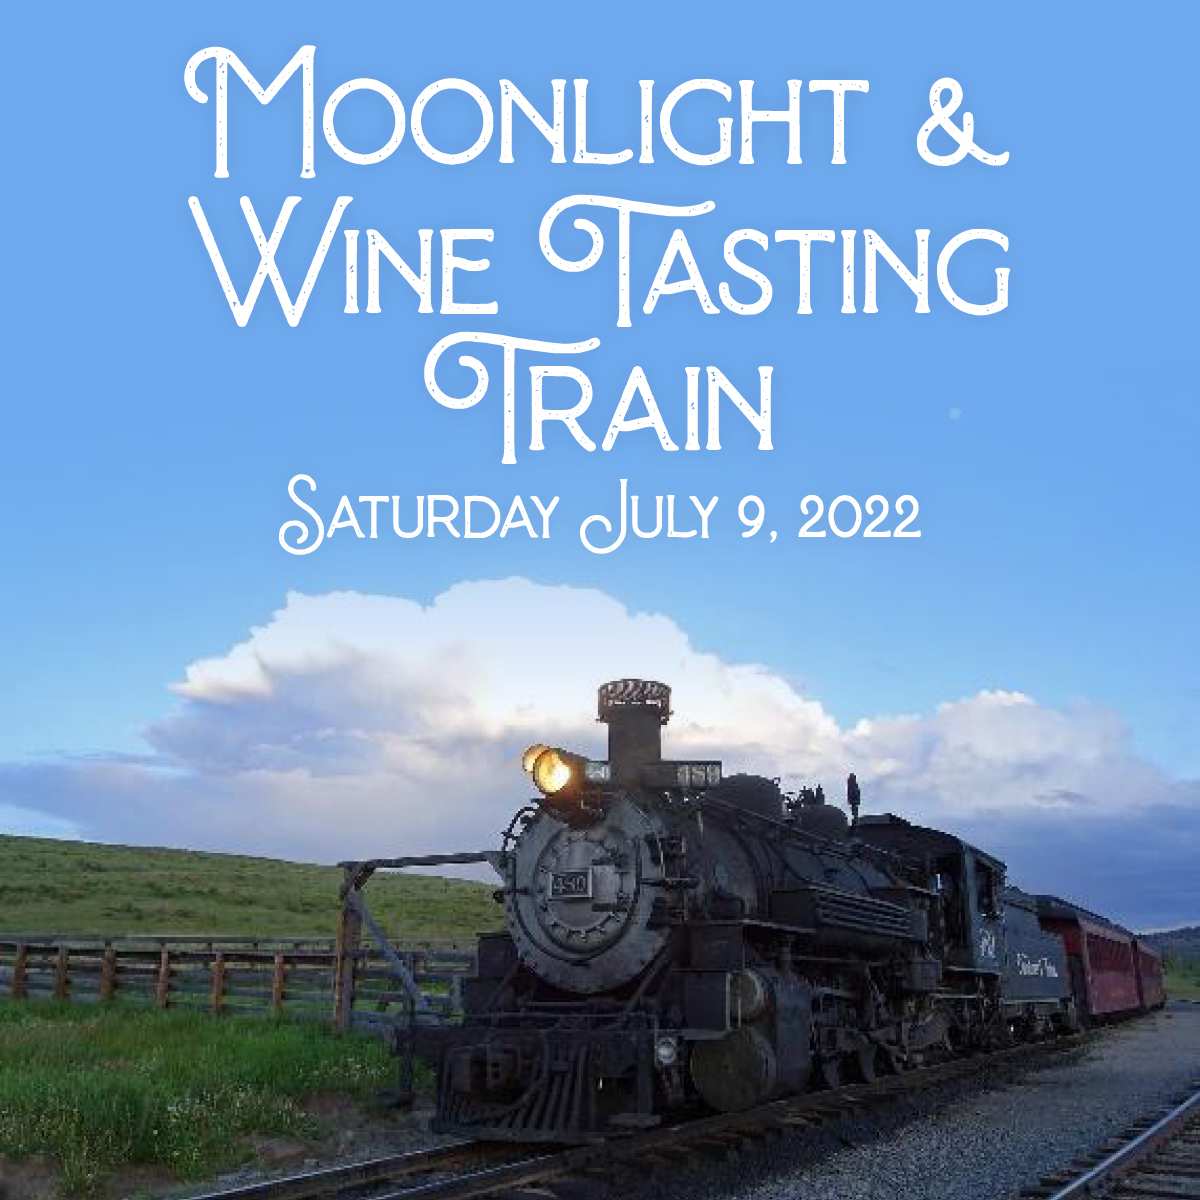 Moonlight & Wine Tasting Train